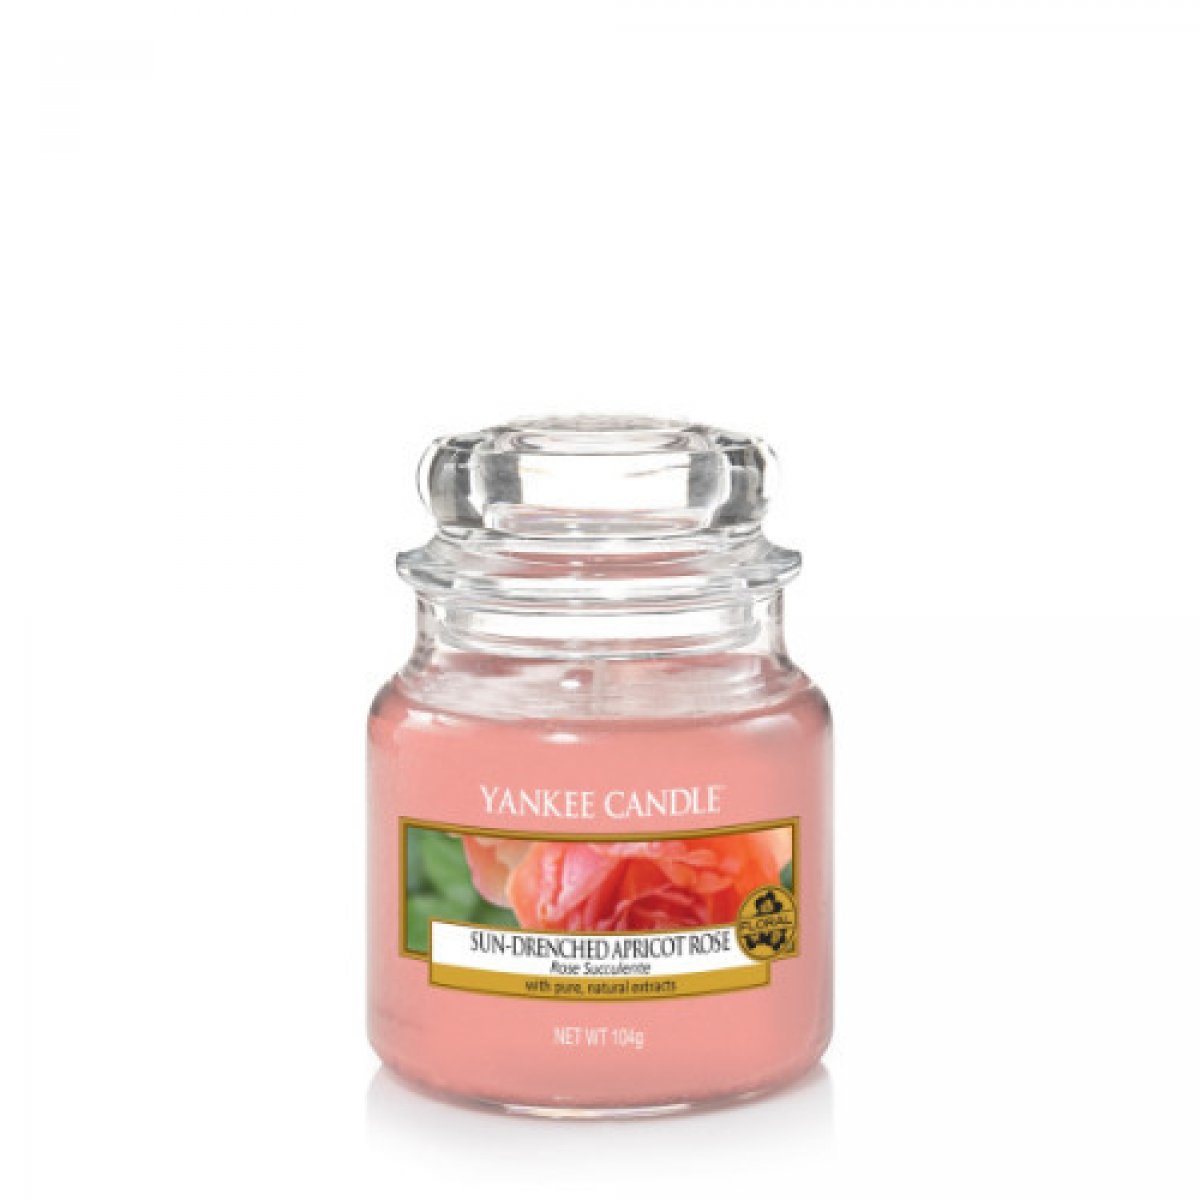 Giara piccola Yankee Candle Sun-Drenched Apricot Rose Fragranza fruttata